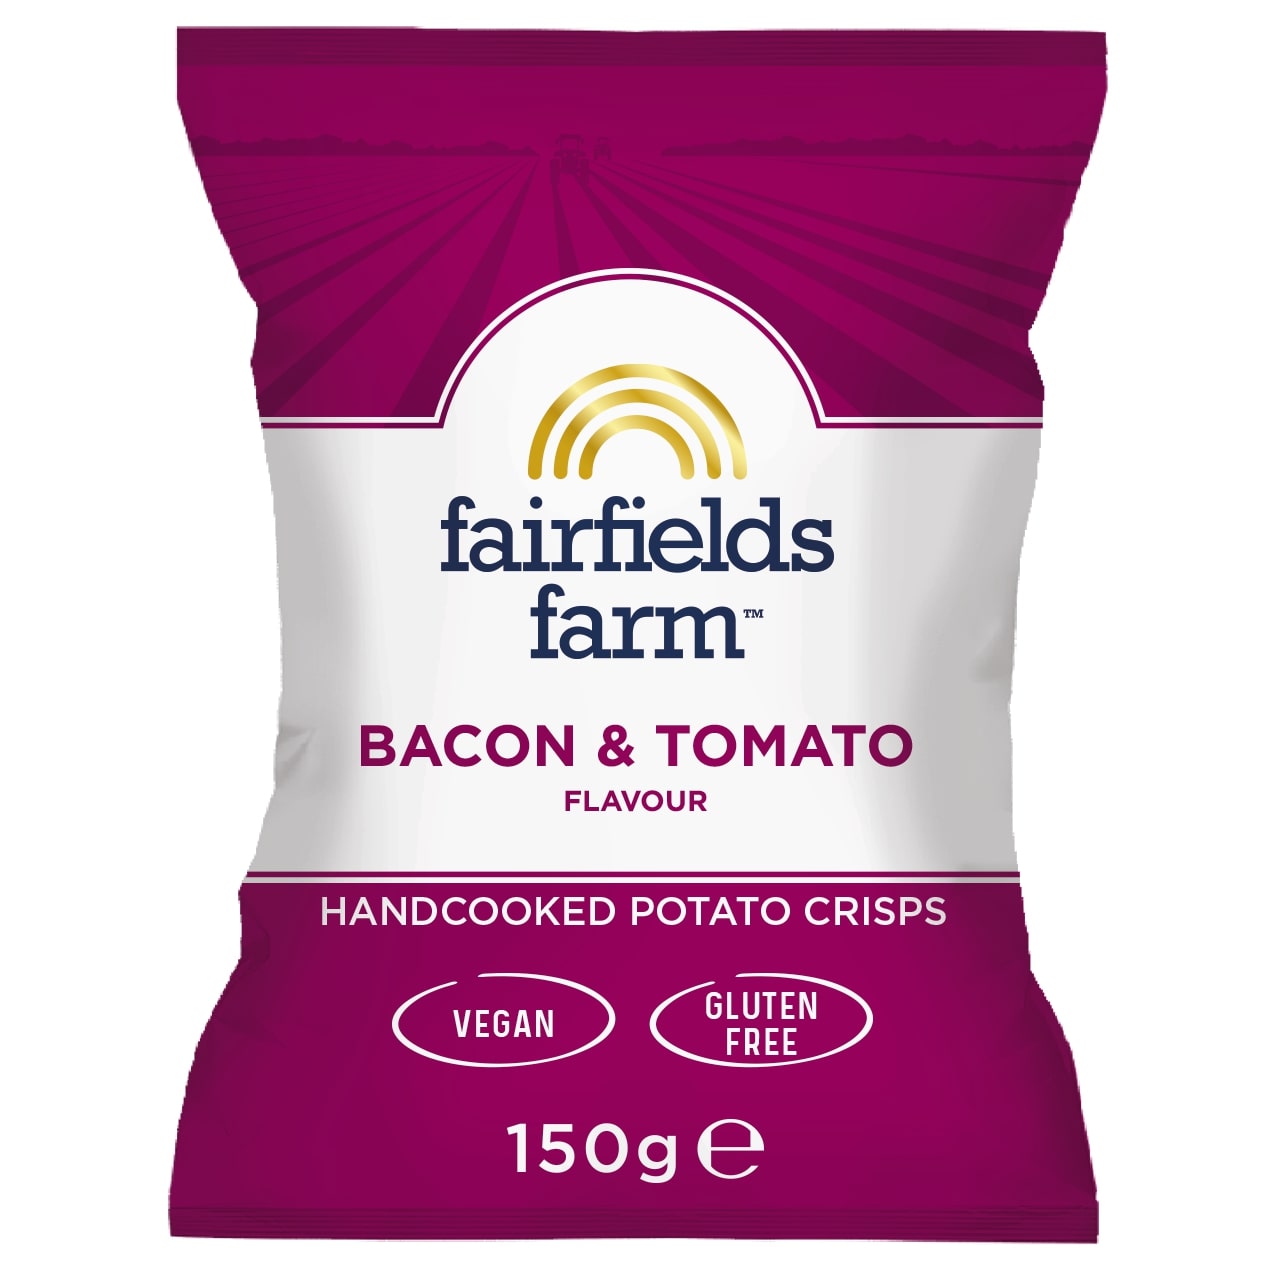 Bacon & Tomato Flavour – 10 x 150g bags